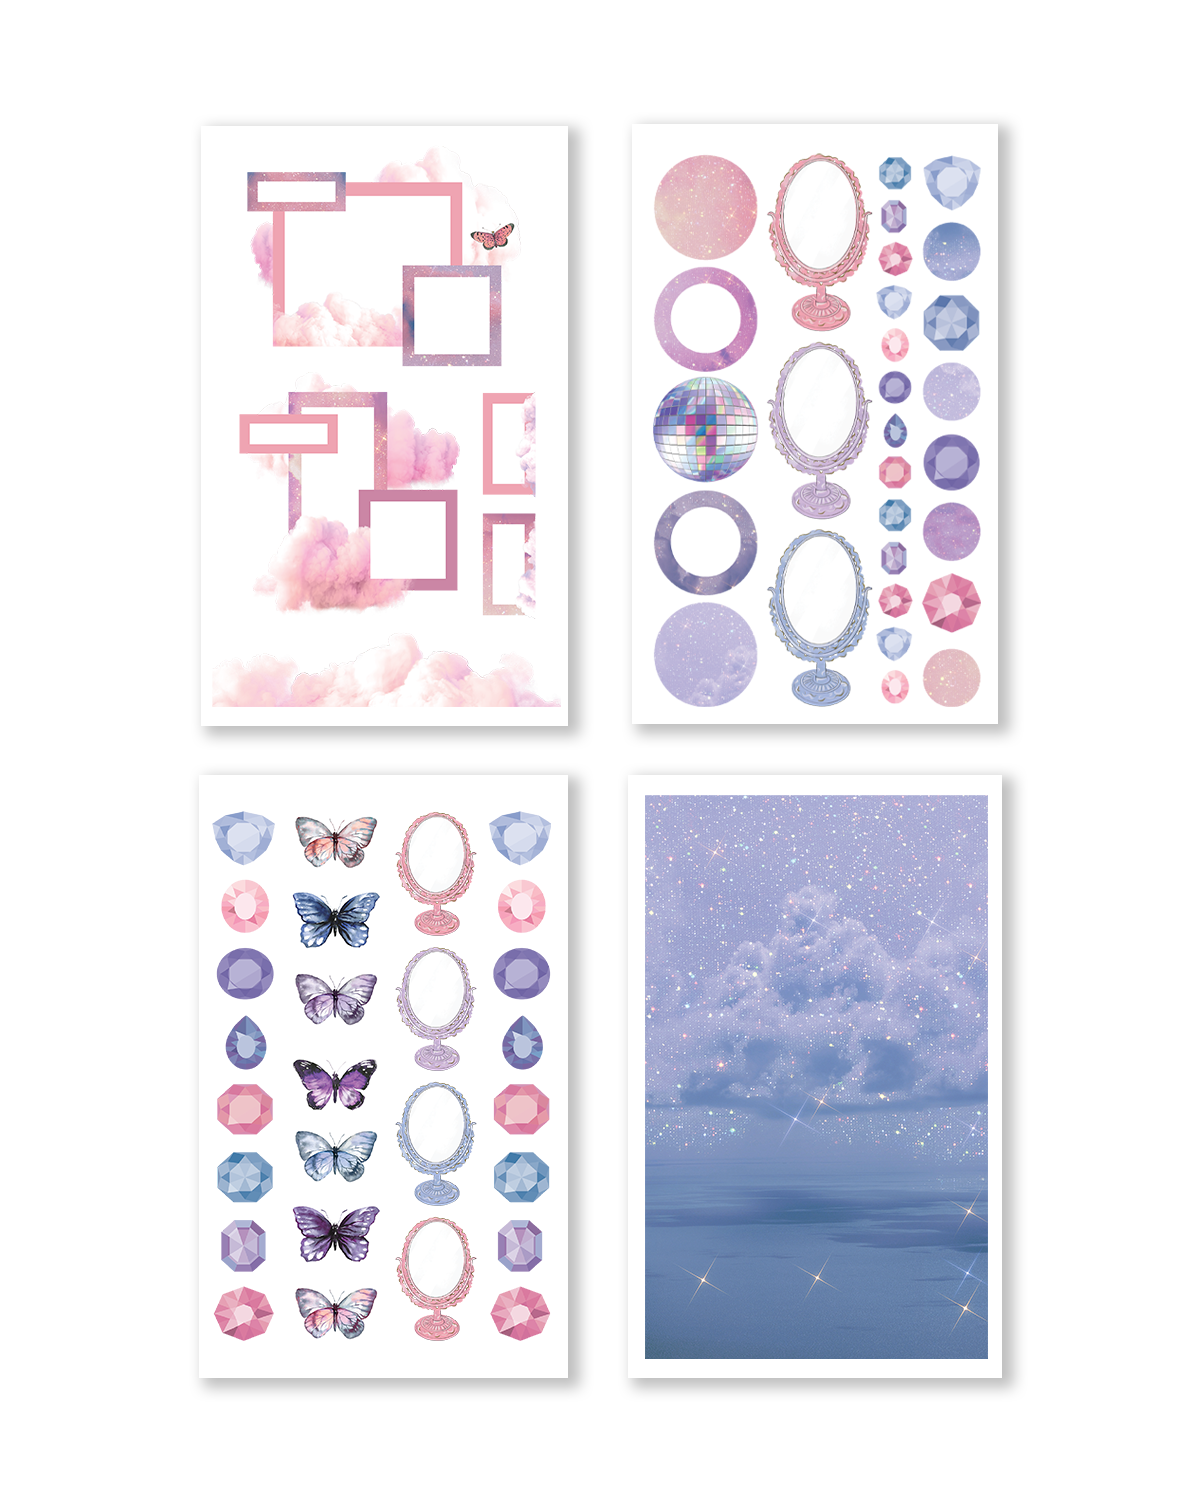 Midnights Aesthetic Sticker Book (Set of 6)